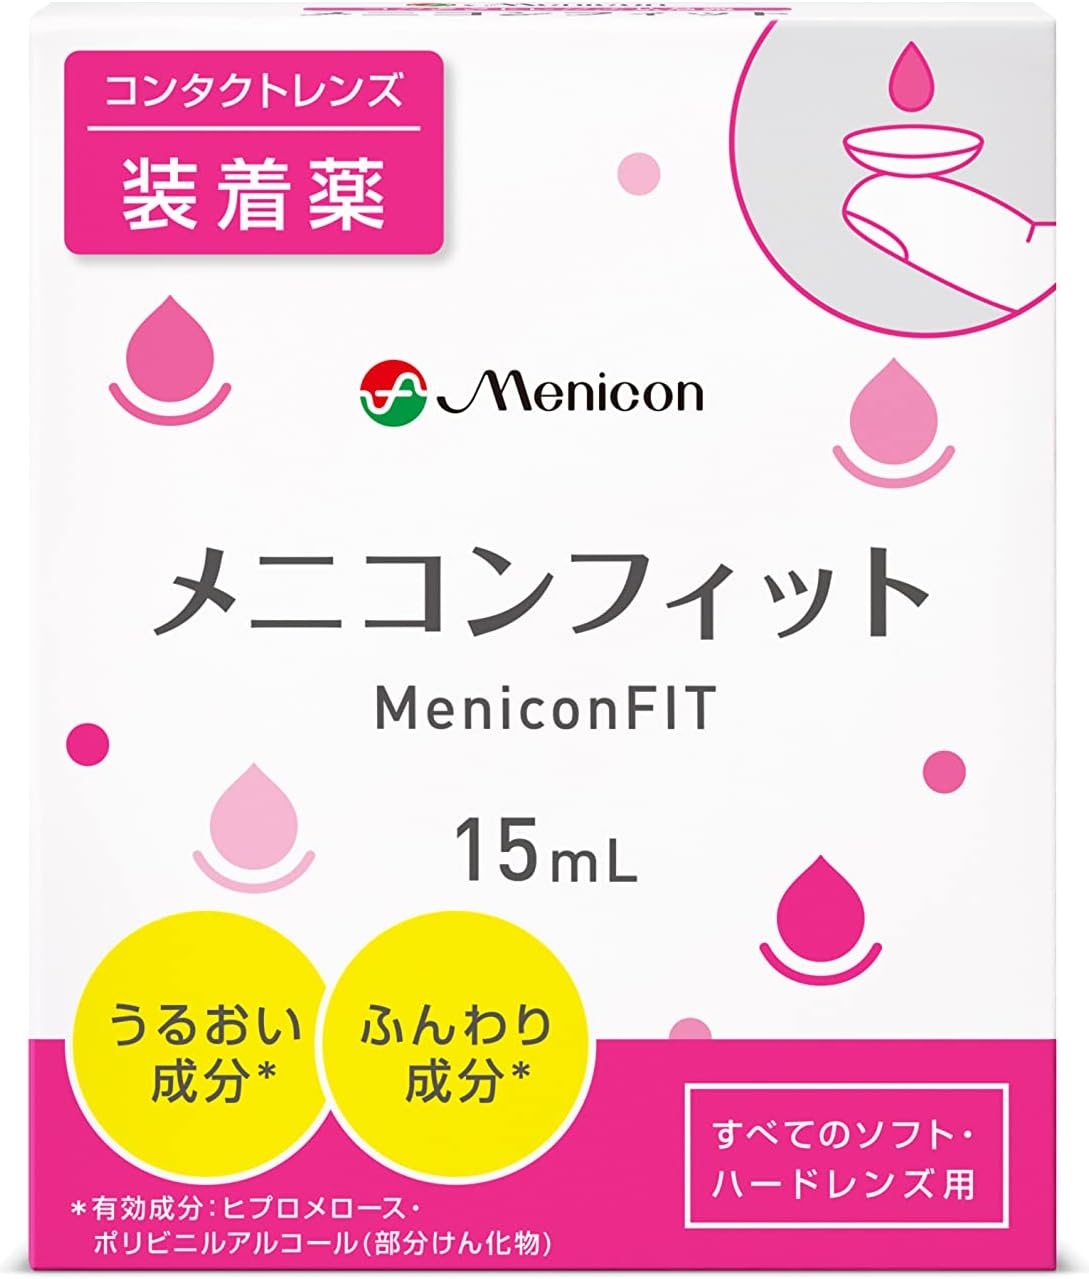 Menicon(メニコン) フィットの商品画像2 